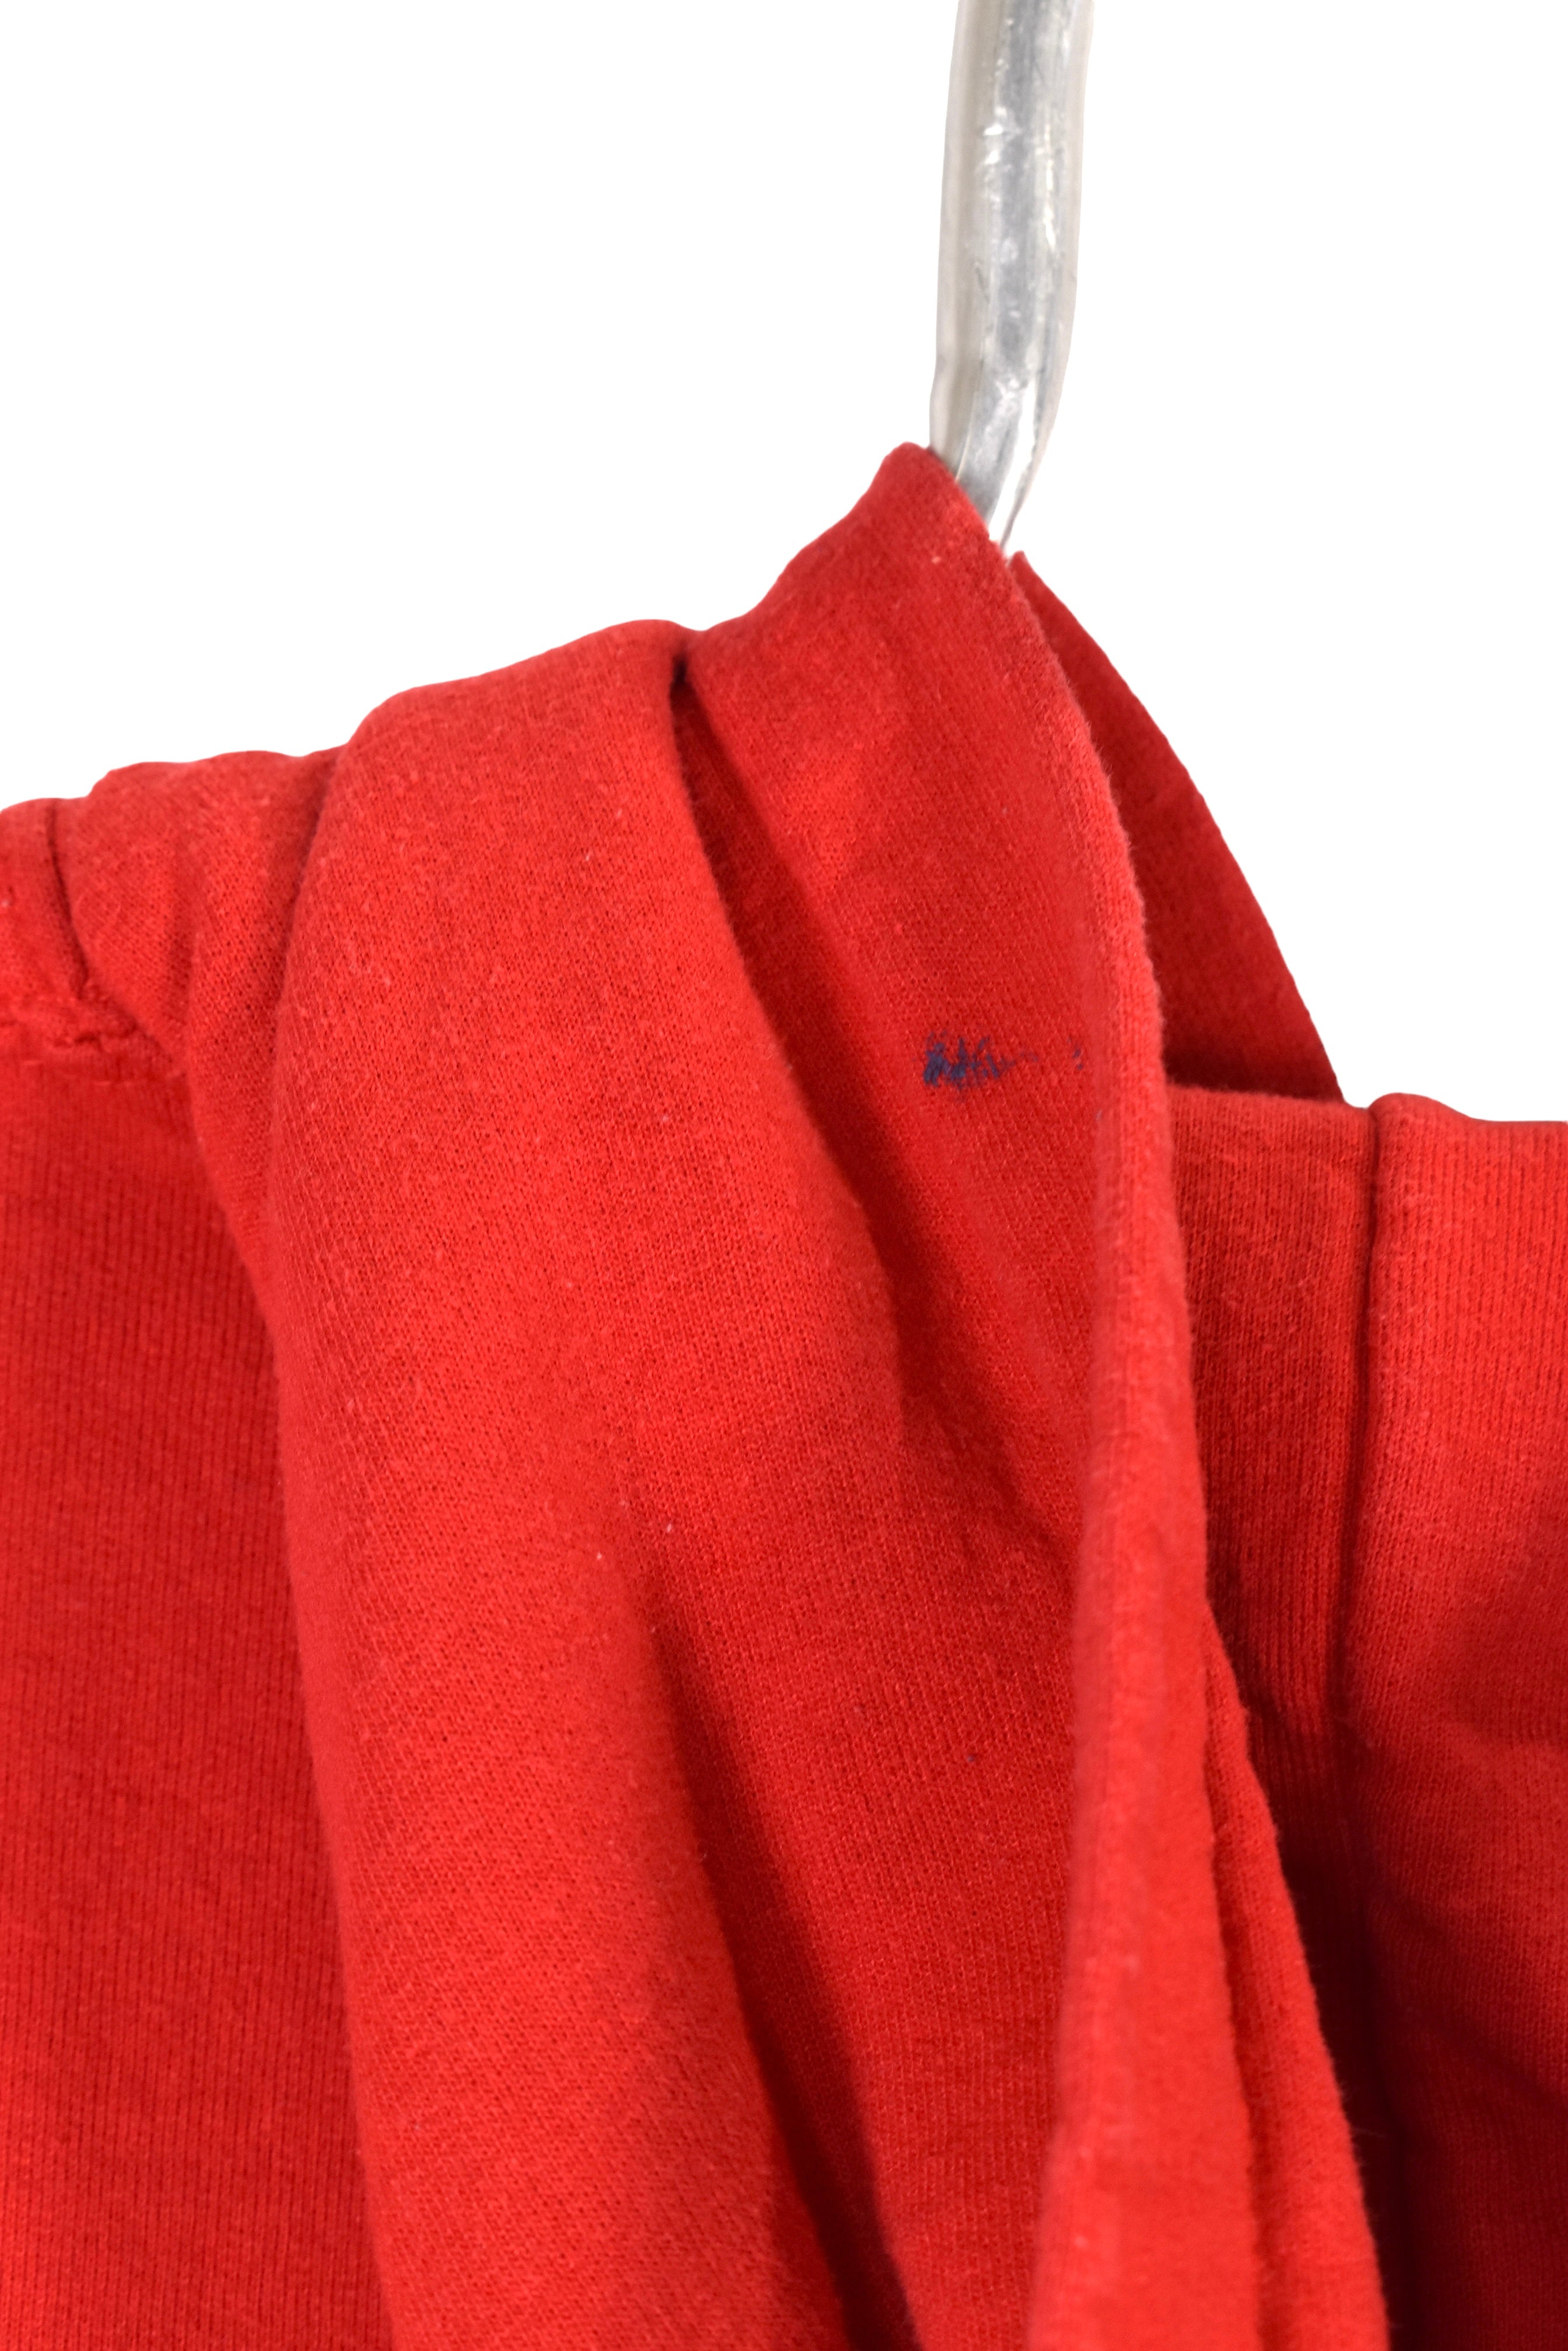 Vintage University of Wisconsin hoodie Small, red graphic sweatshirt